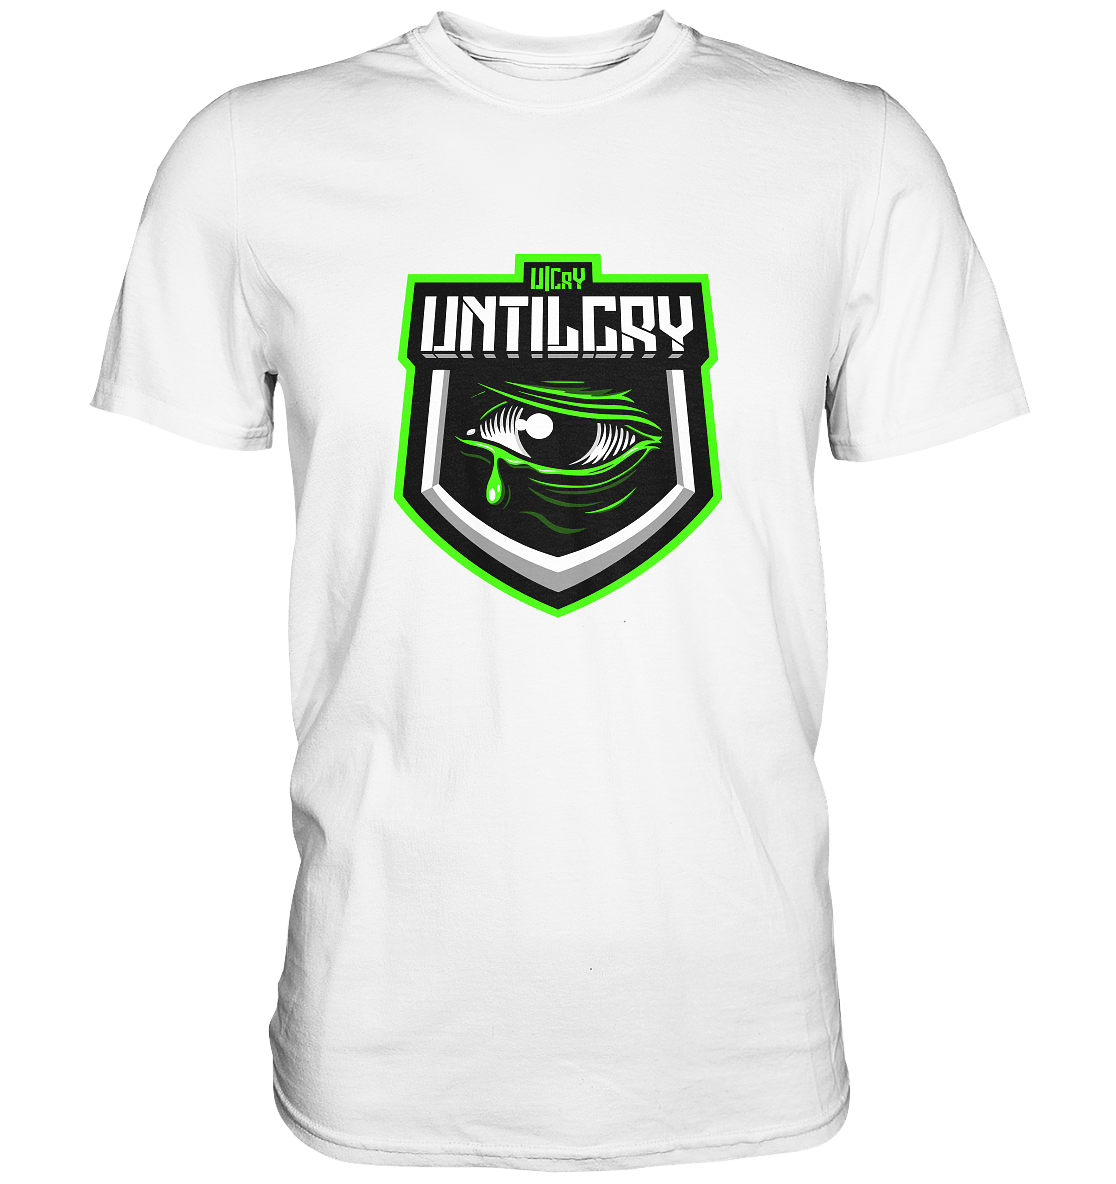 UNTIL CRY - Basic Shirt